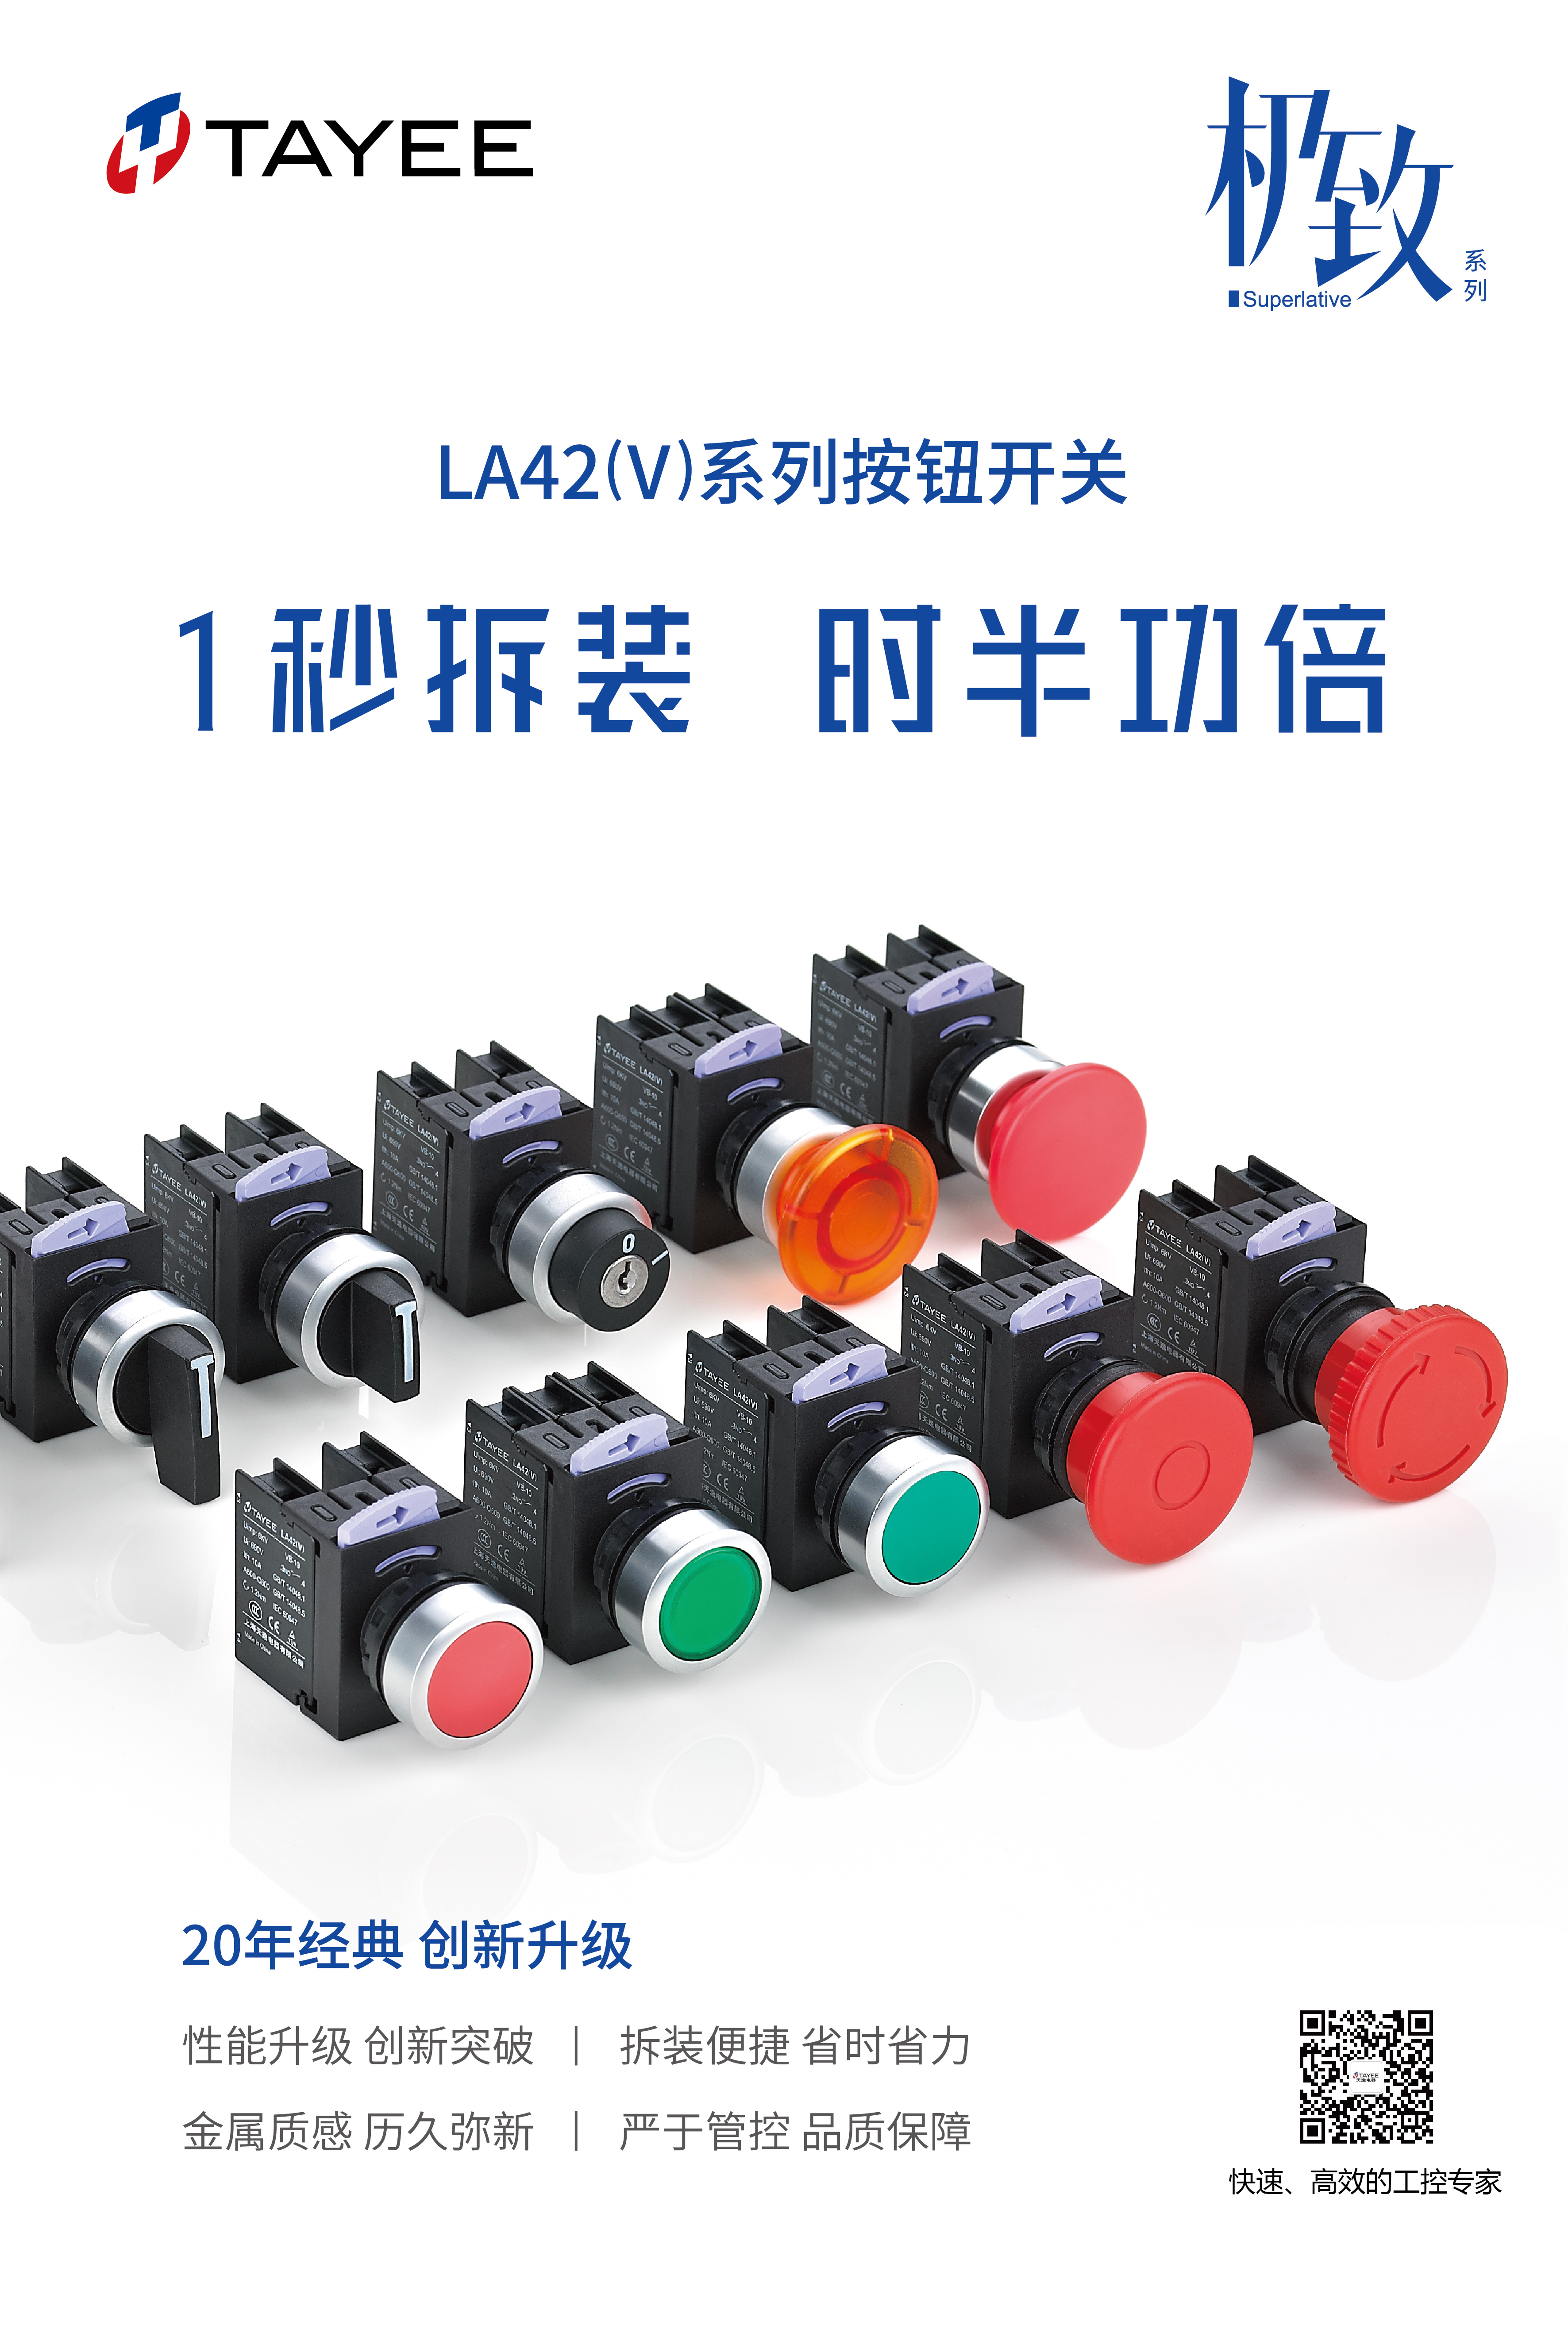 LA42V系列按钮开关新品上市